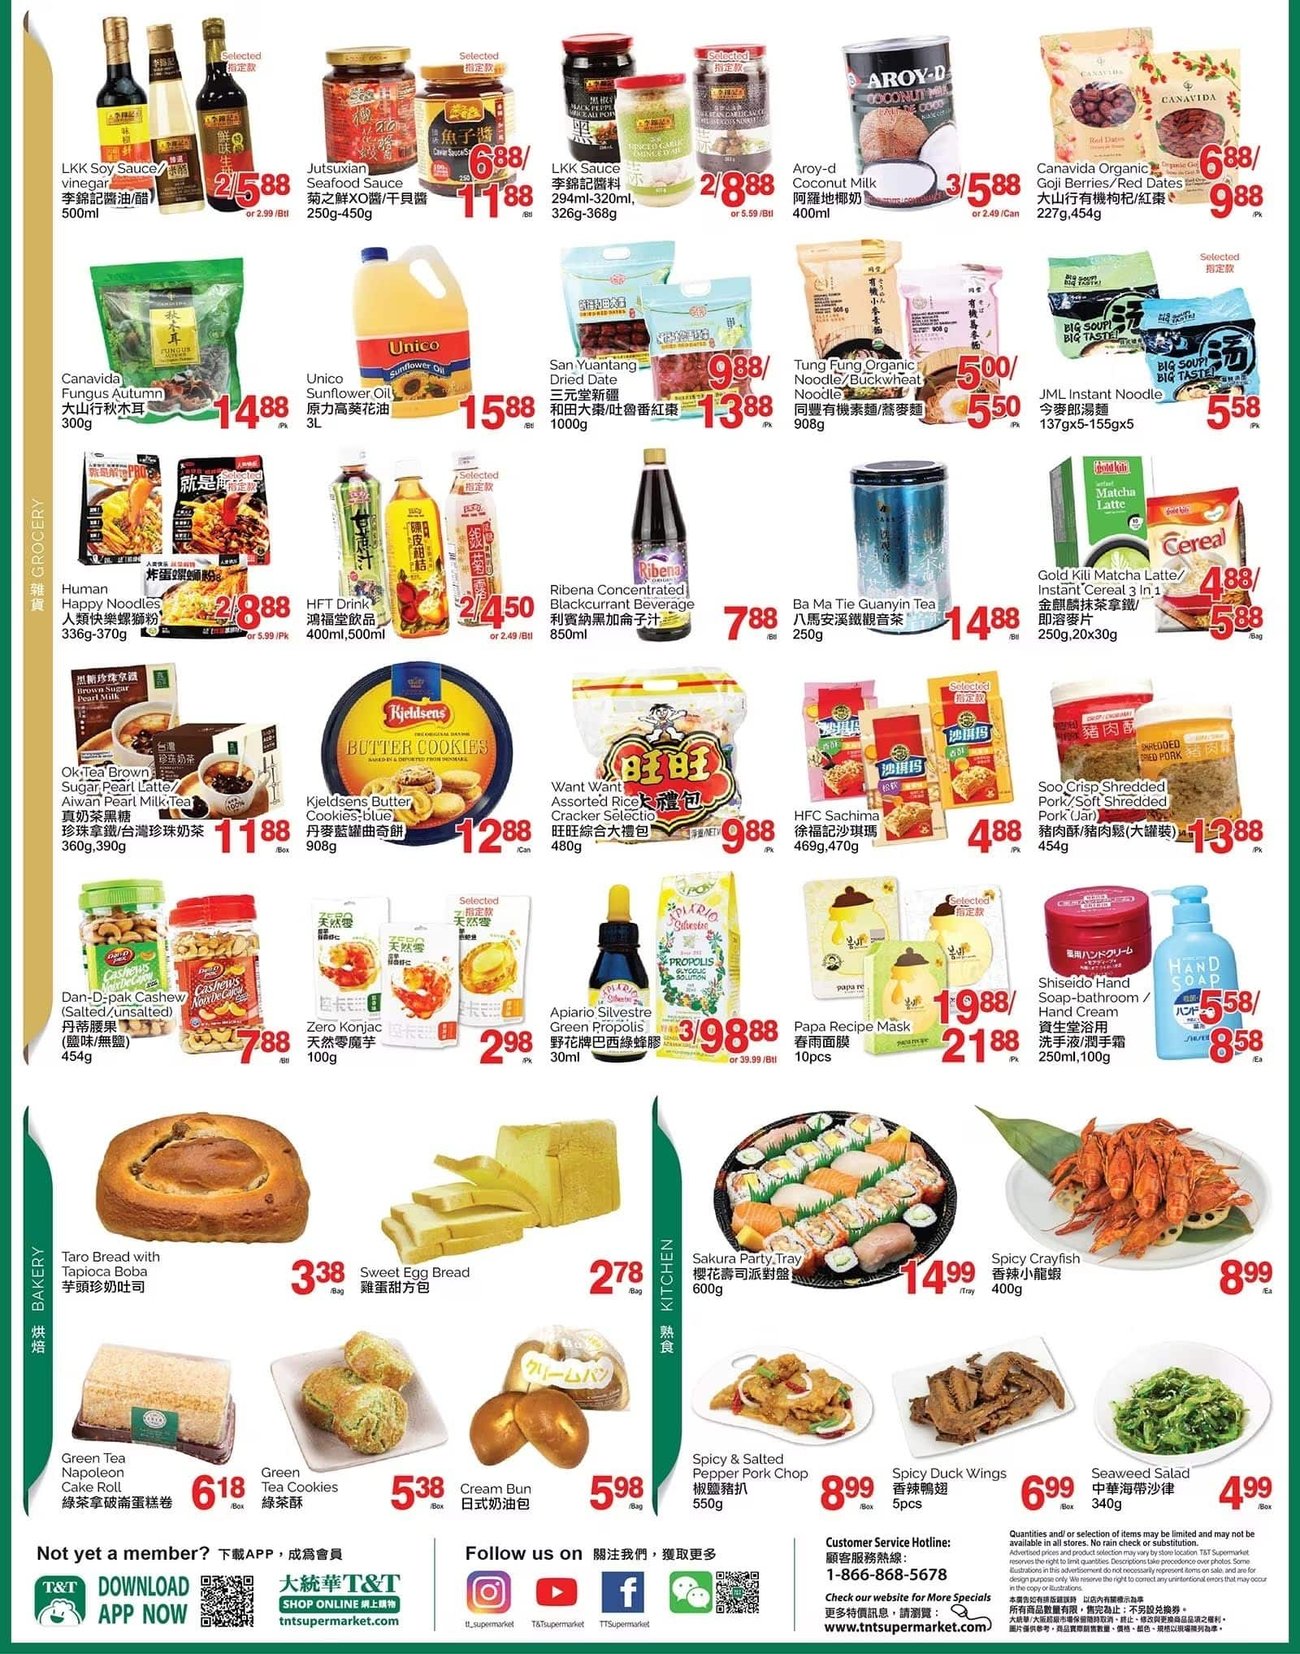 T & T Supermarket - Ontario - Weekly Flyer Specials - Page 3